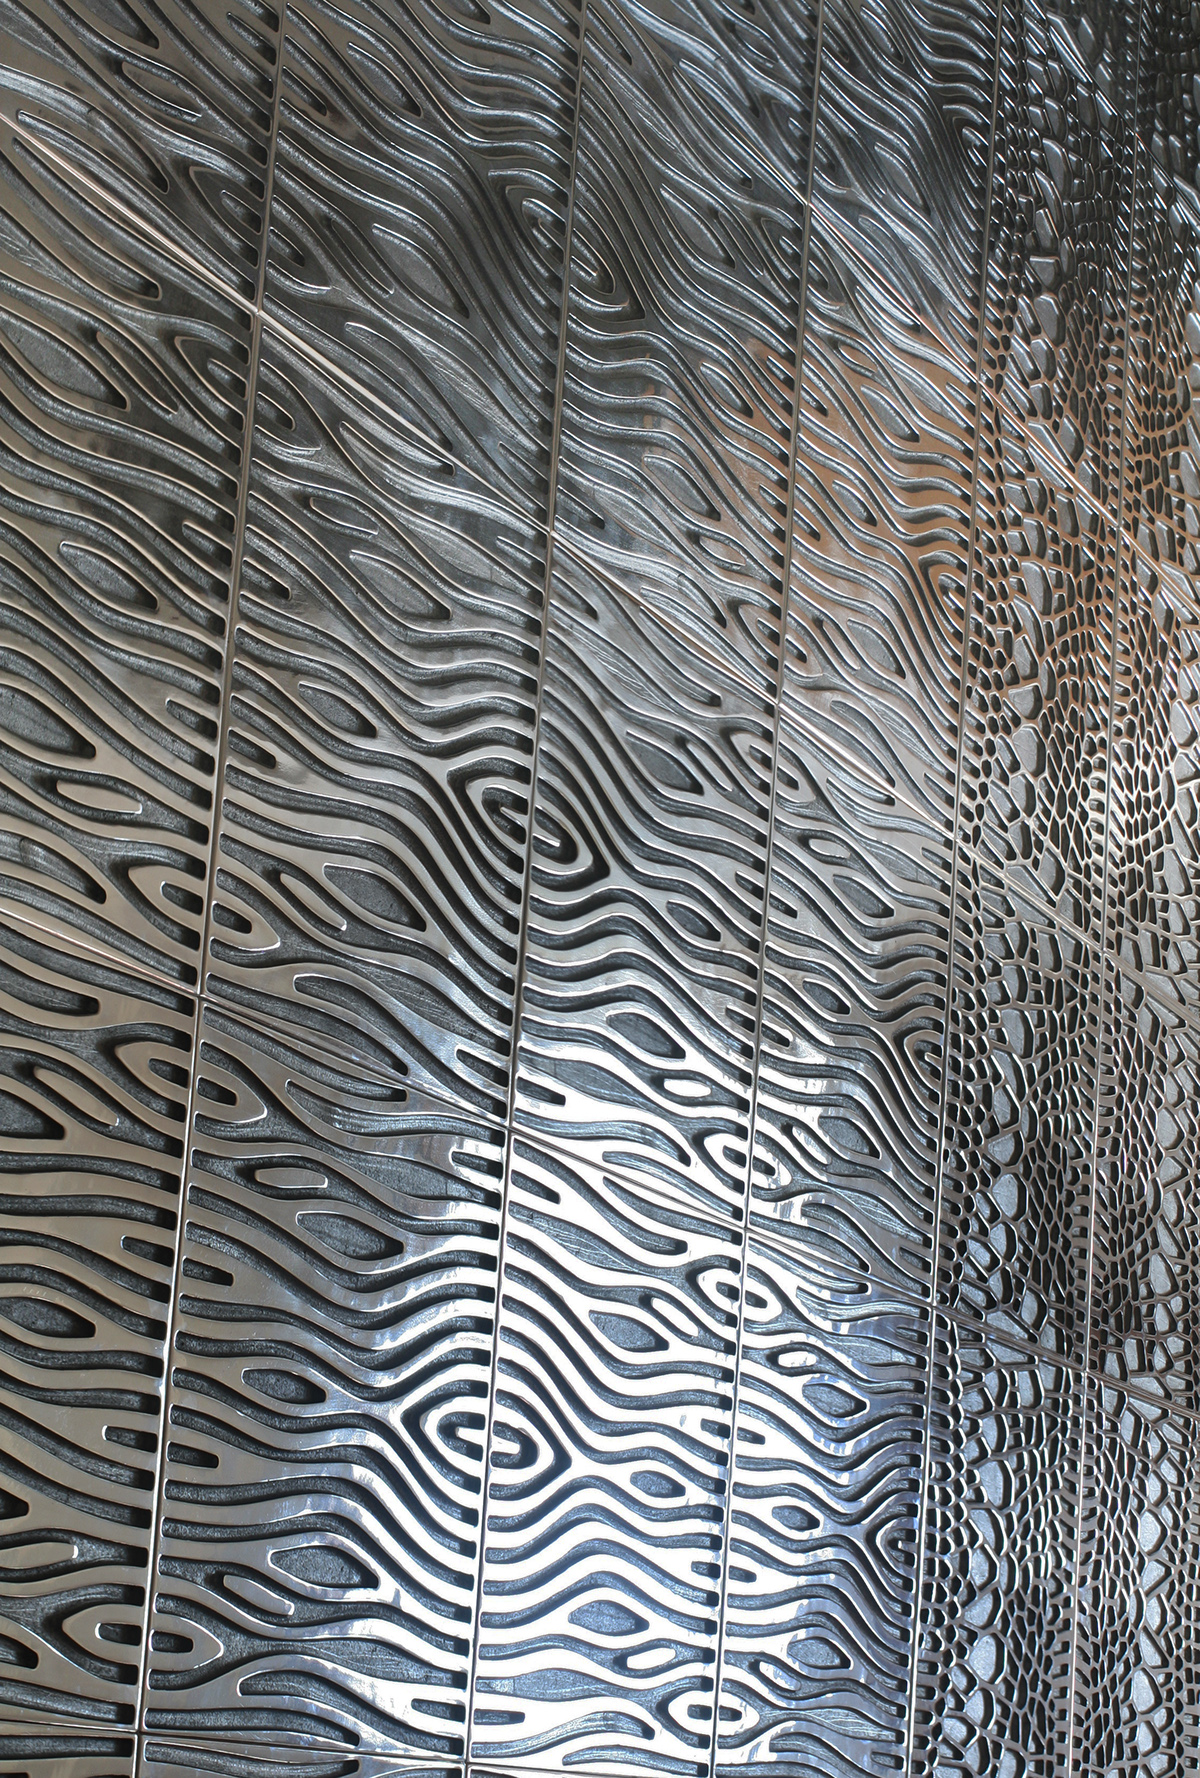 aluminium RECYCLED metal shiny silver wall tile art Mural skin reptile organic design modern contemporary